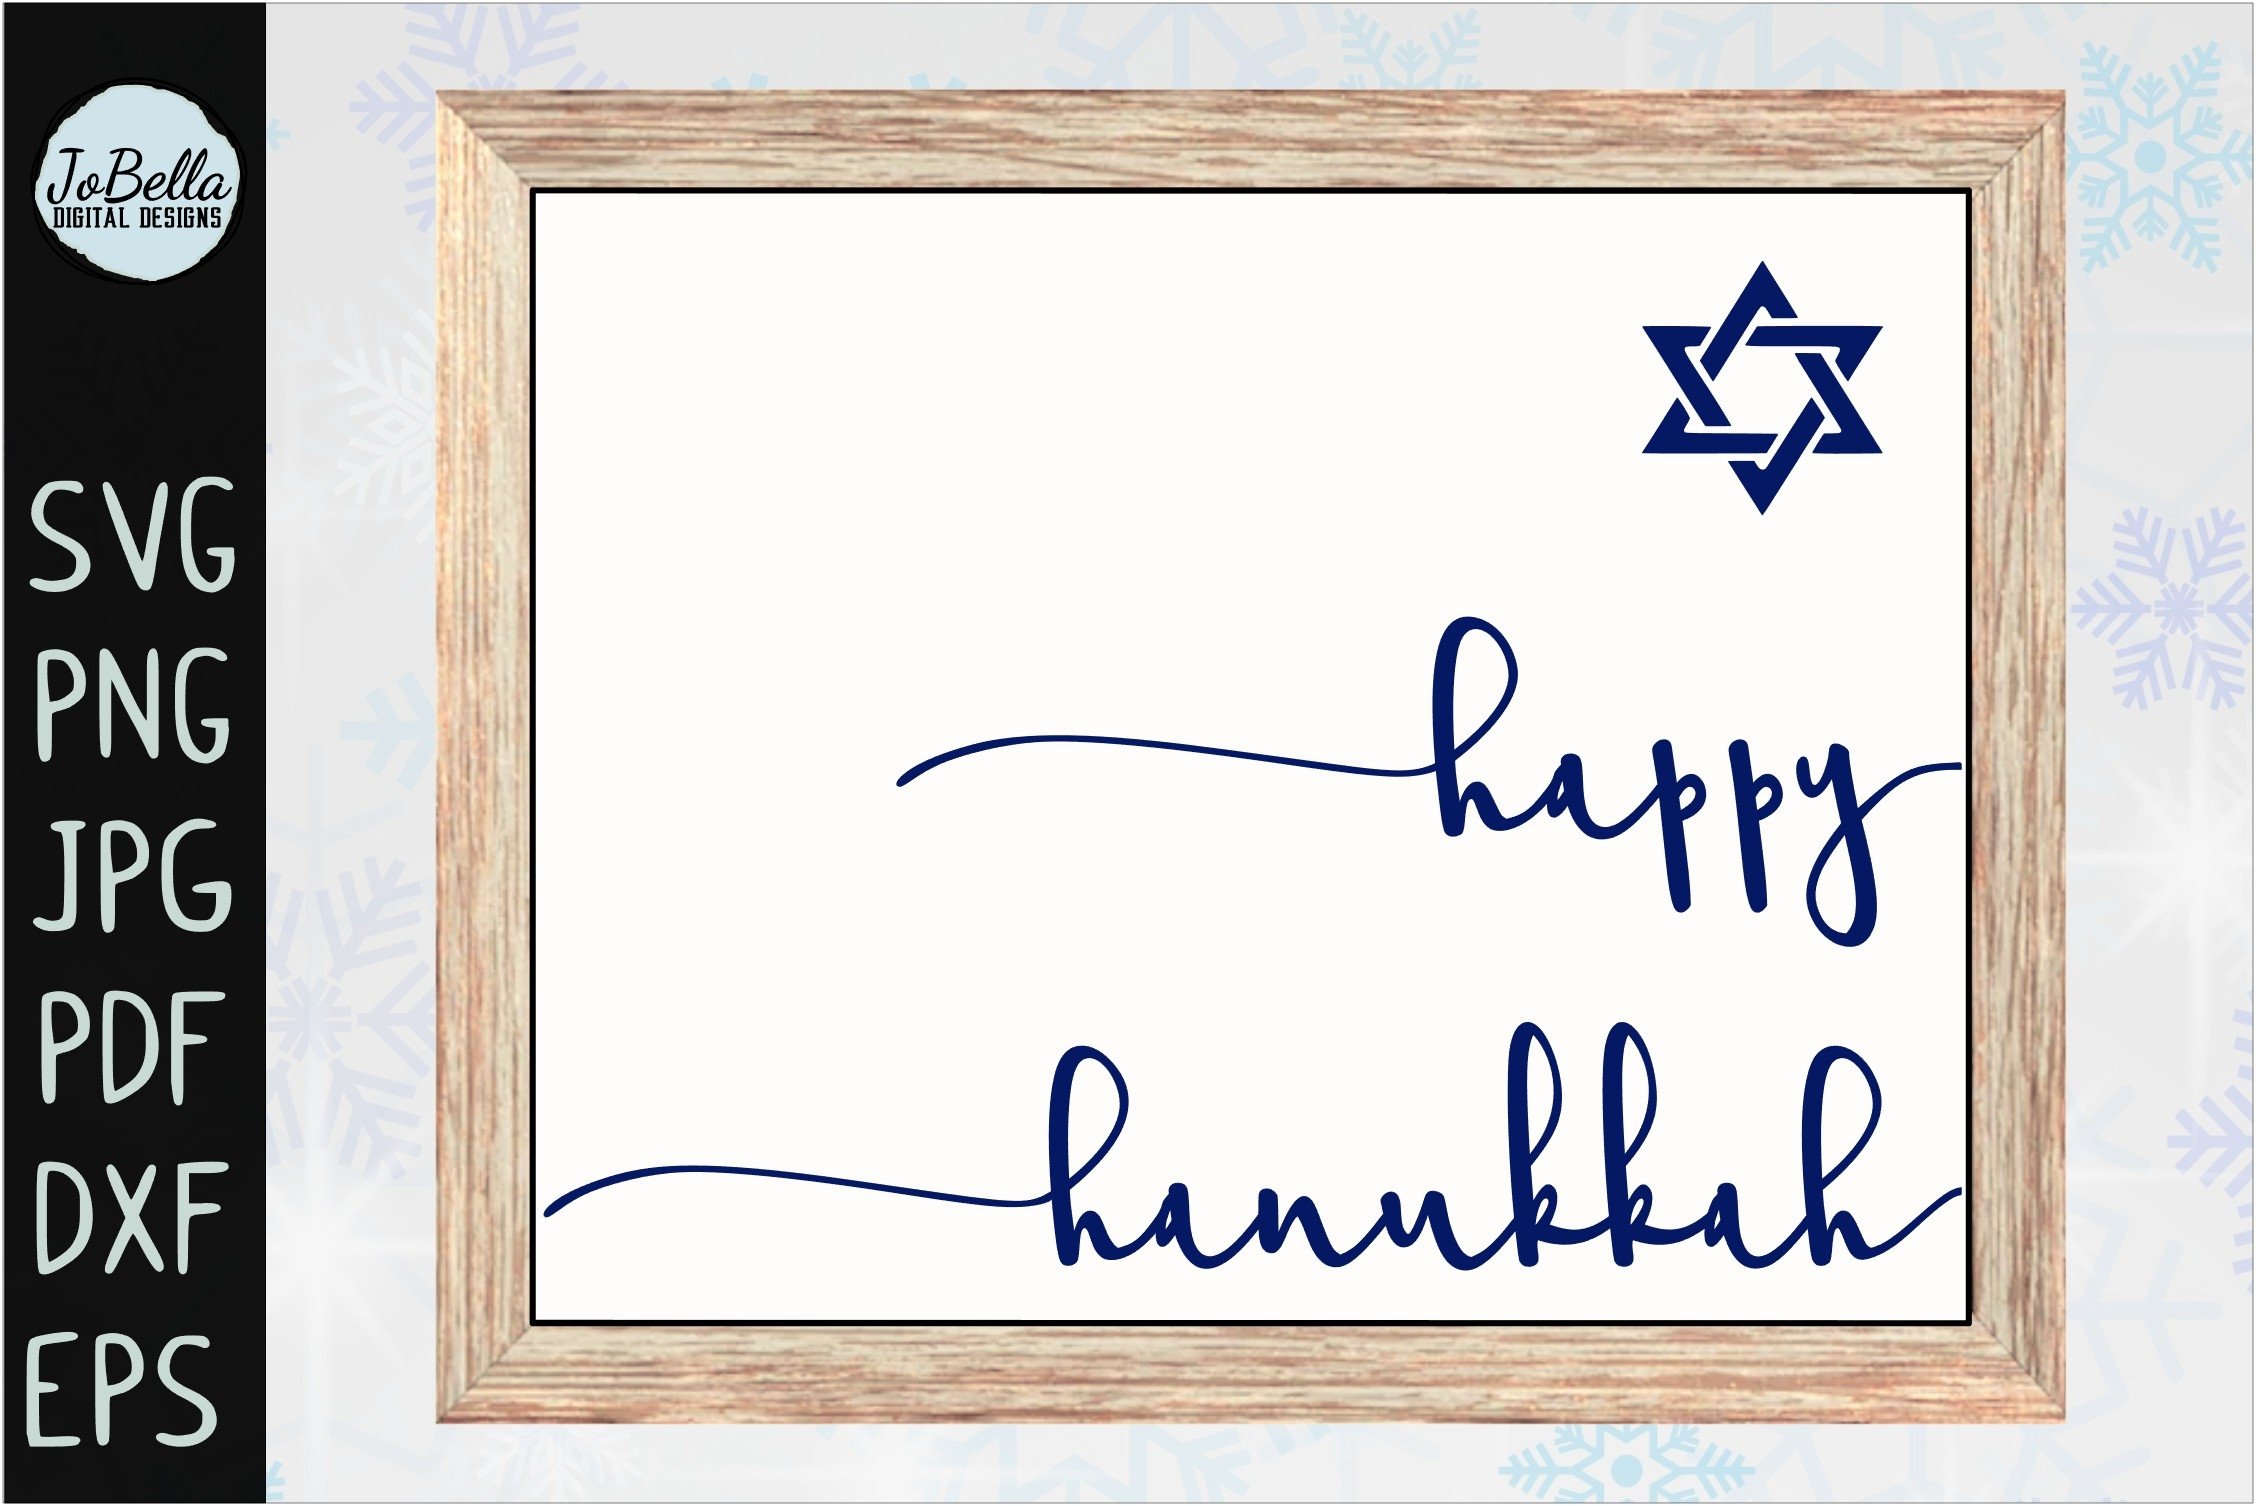 The lettering "Happy Hanukkah".